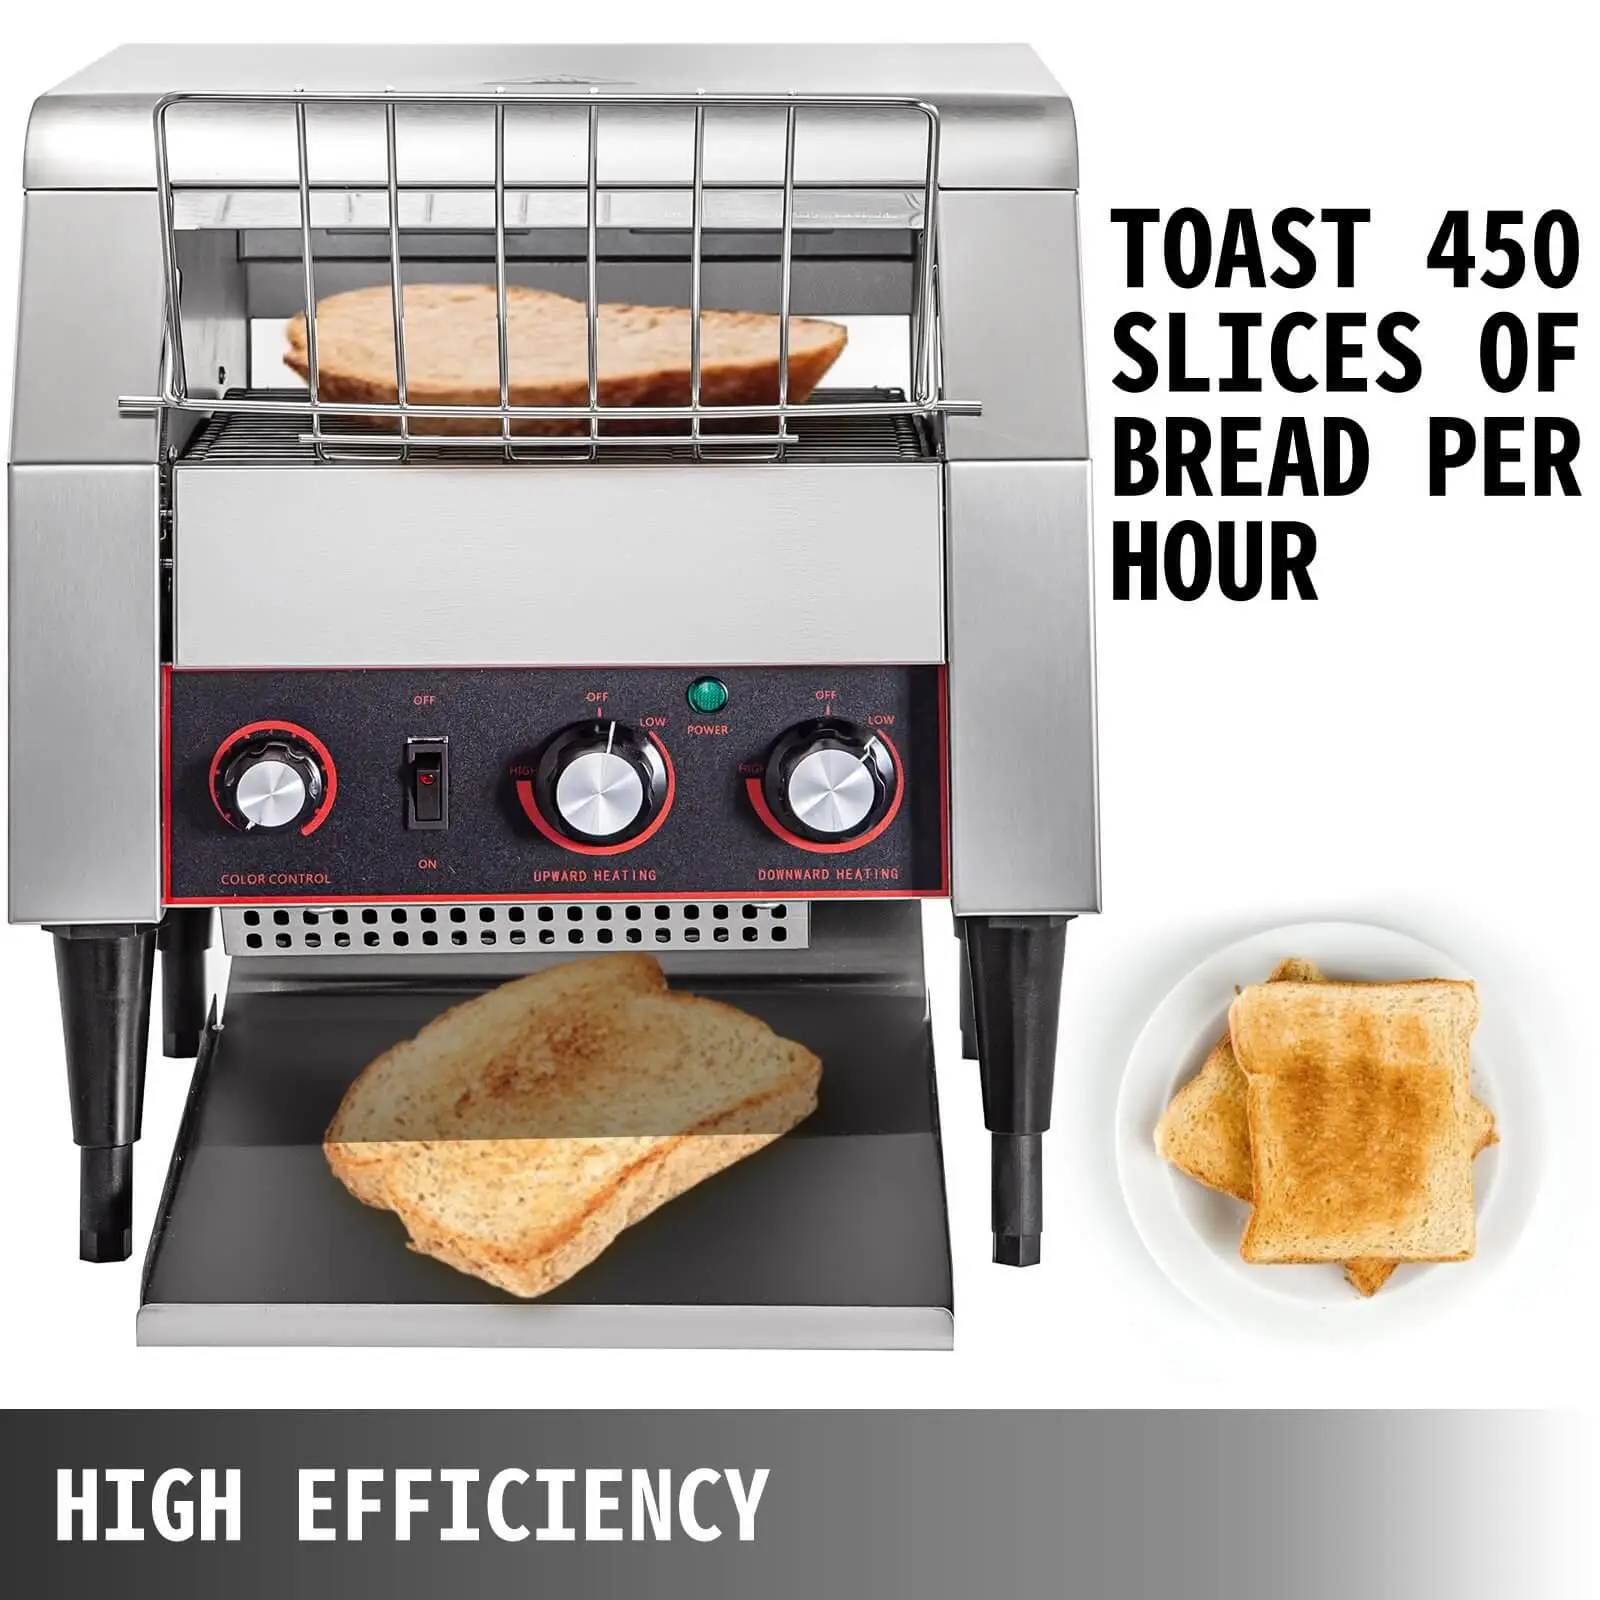 450 slices per hour